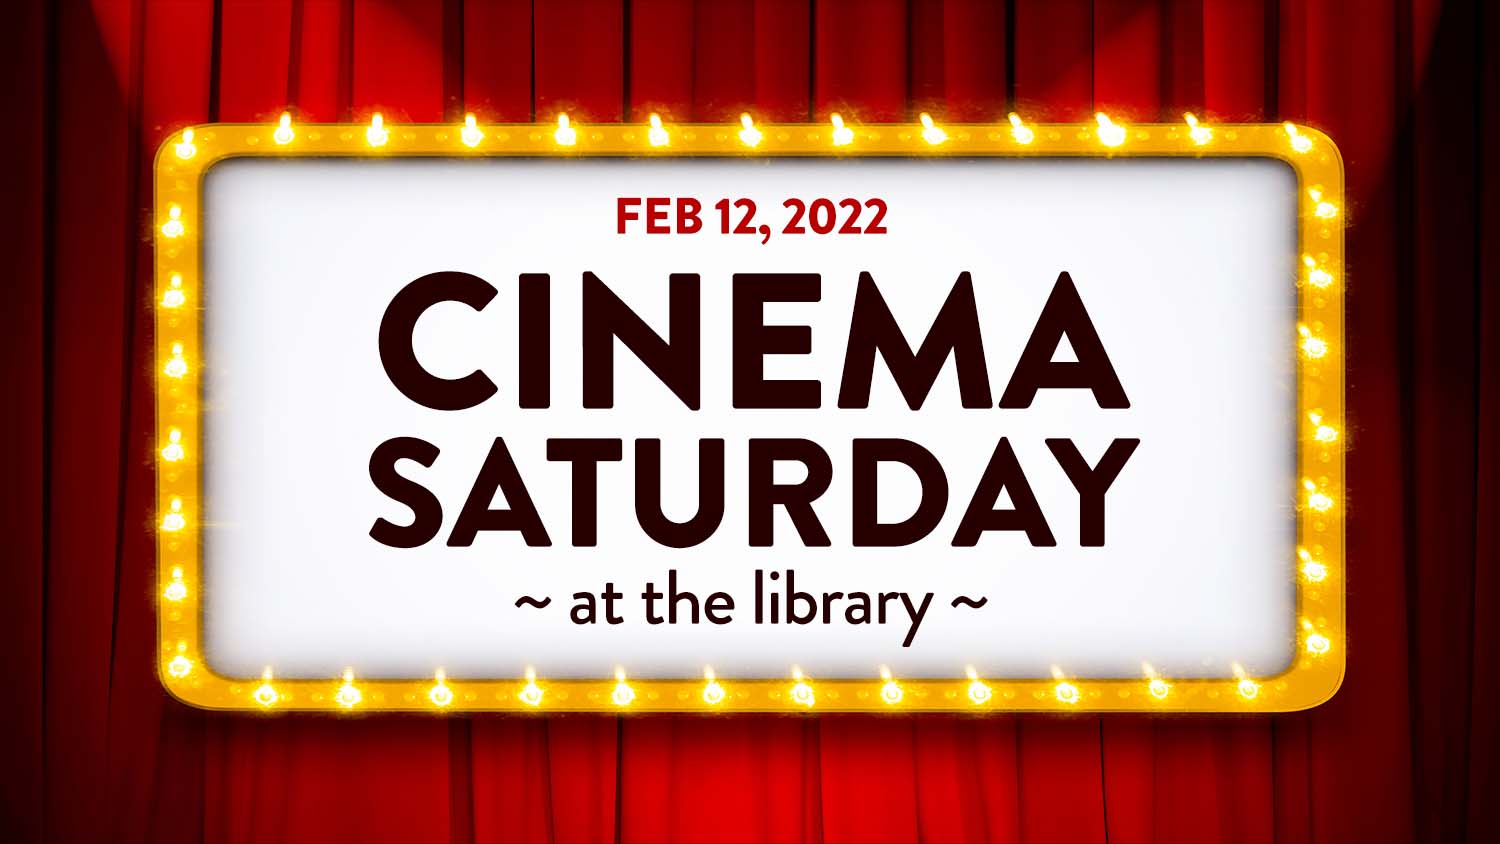 Theater sign: Cinema Saturday